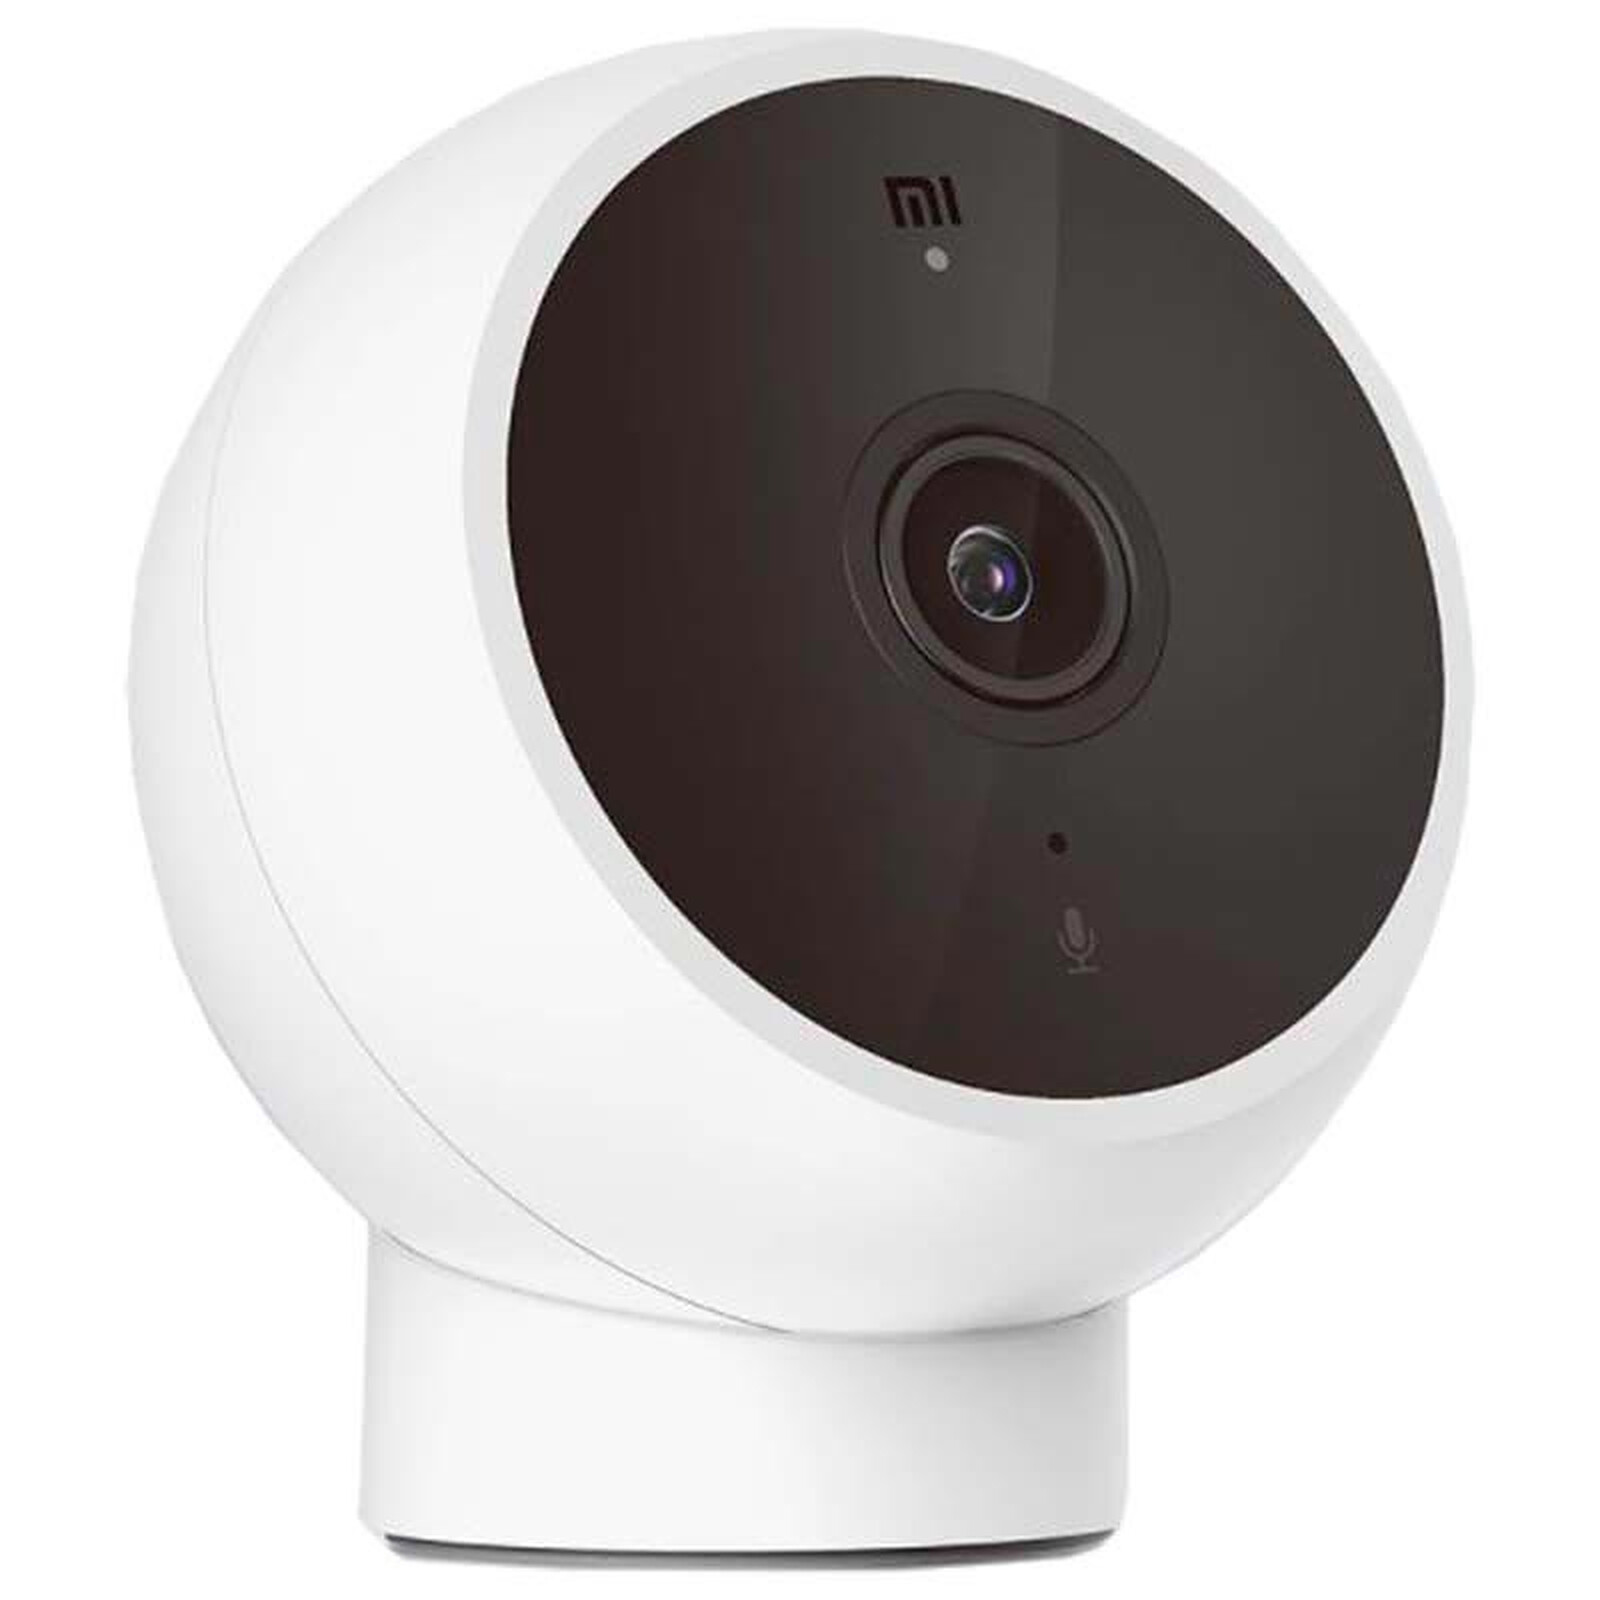 XIAOMI - Xiaomi Smart Camera C200 - Caméra de surveillance